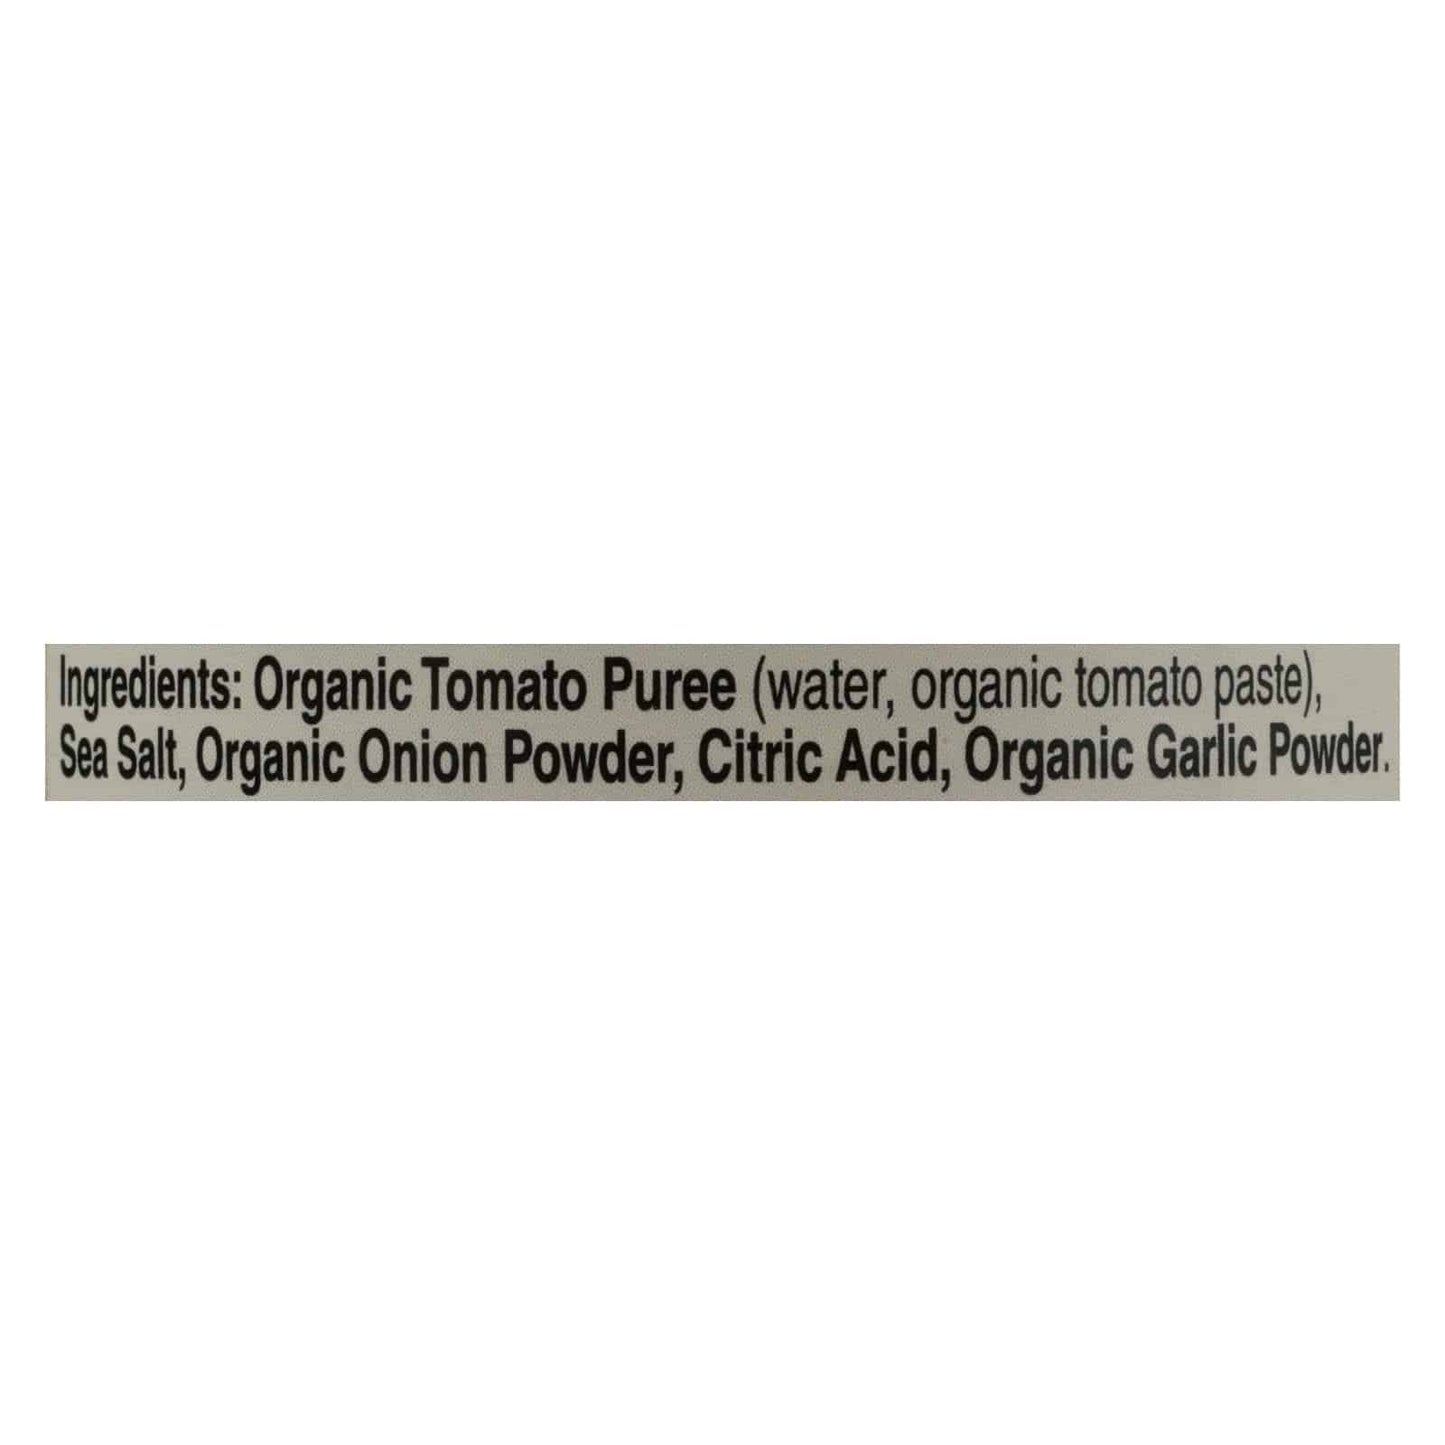 Buy Muir Glen Organic Regualr Tomato Sauce - Case Of 24 - 8 Fl Oz  at OnlyNaturals.us